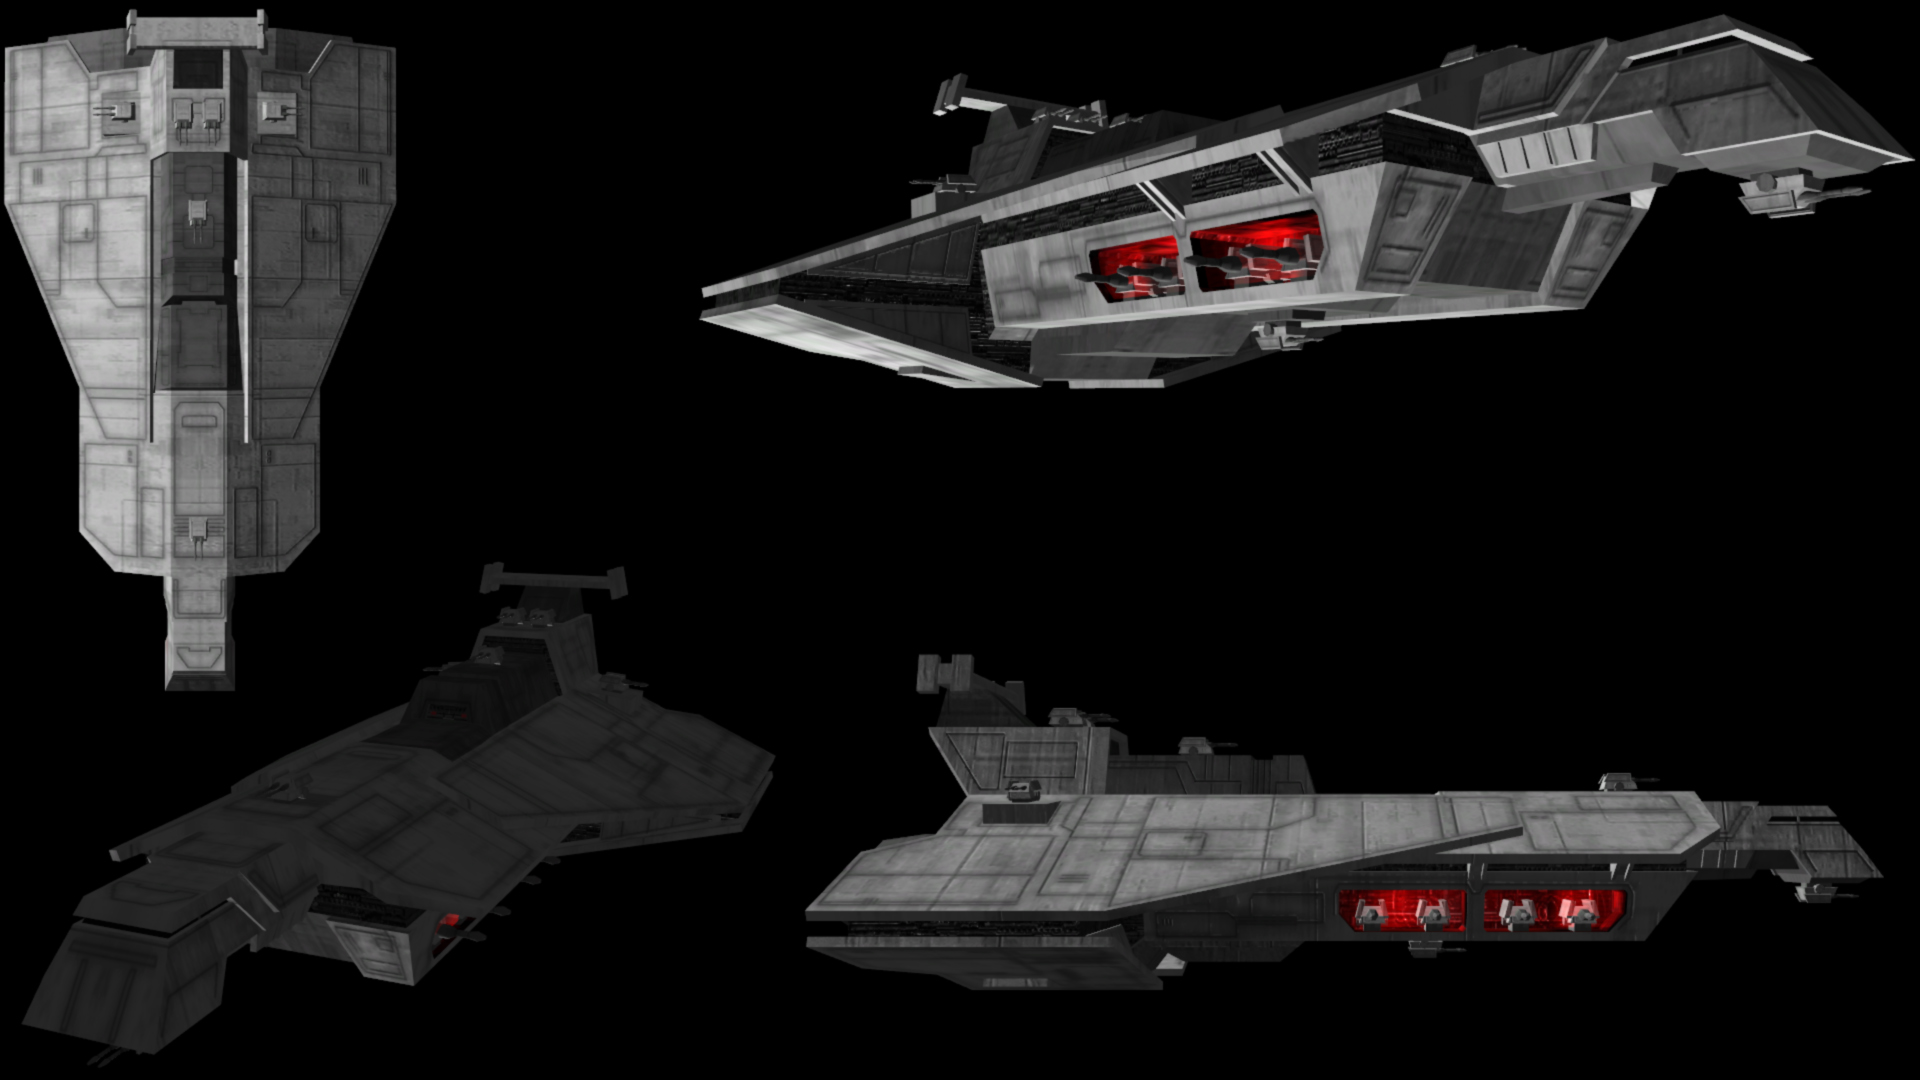 Sith Anti Fighter Corvette image - Old Republic at War mod for Star Wars: E...